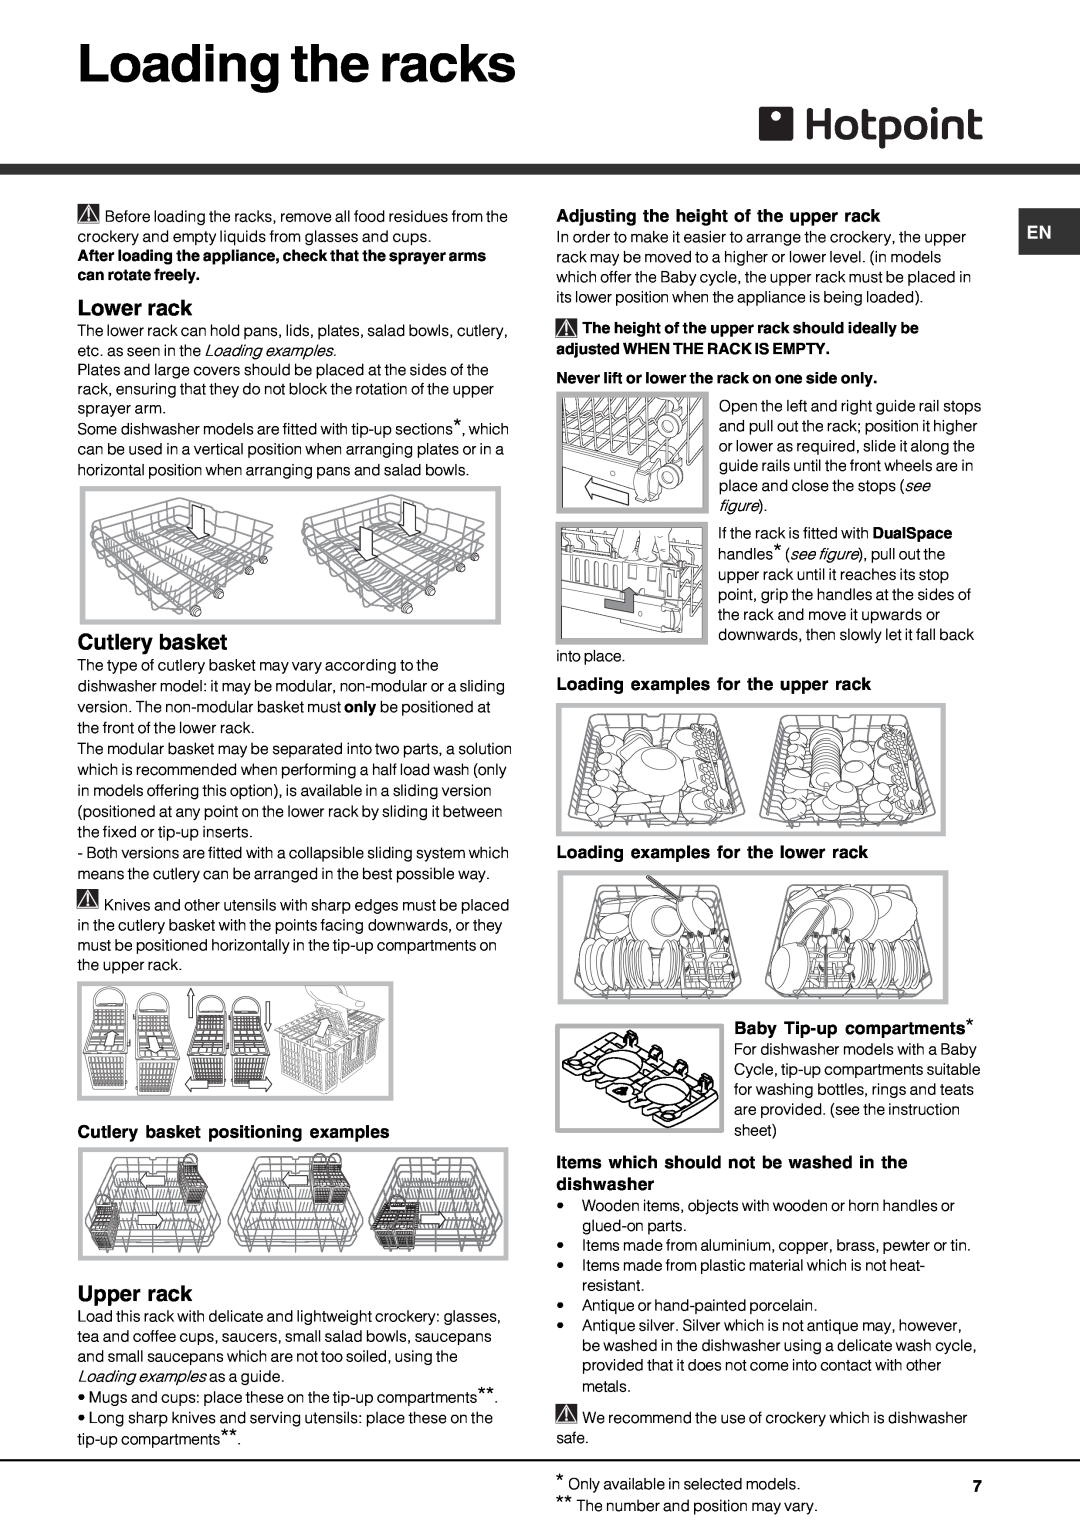 Hotpoint LFT 321 manual Loading the racks, Lower rack, Cutlery basket, Upper rack 